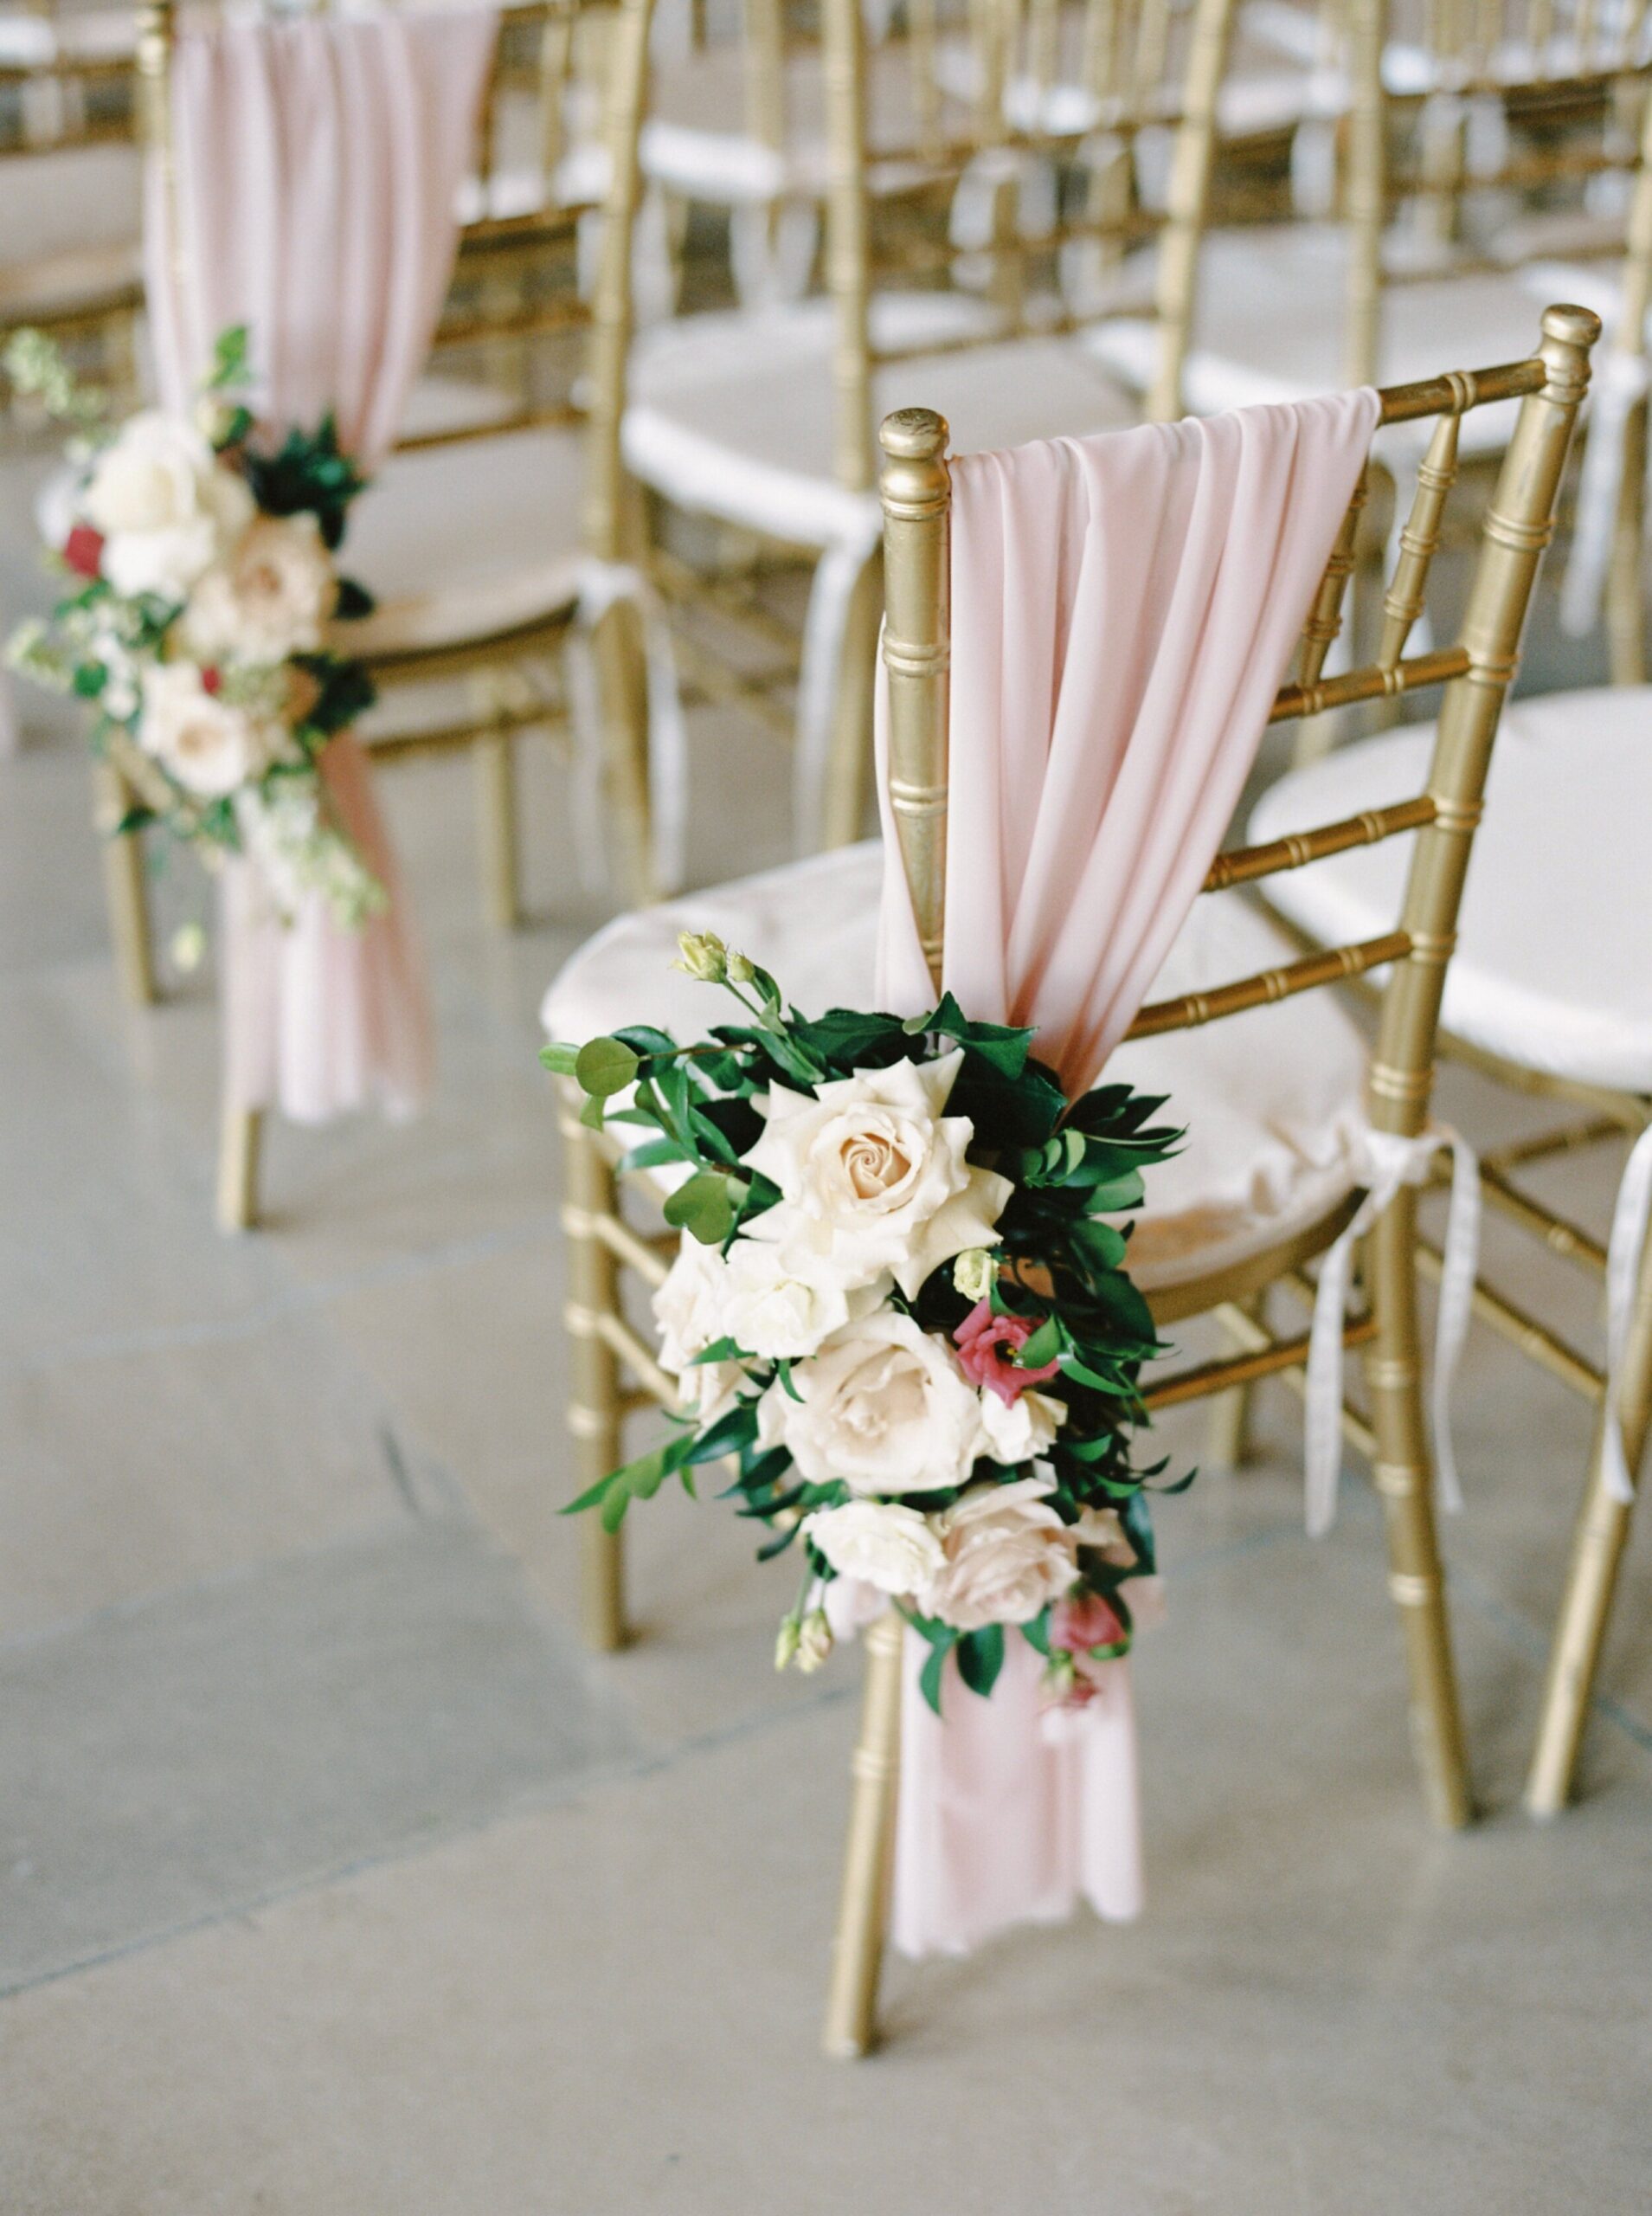  Mount Stephen Hall floral display for wedding ceremony | Fairmont Banff Springs hotel wedding photographers | fine art film photography | portra 400 